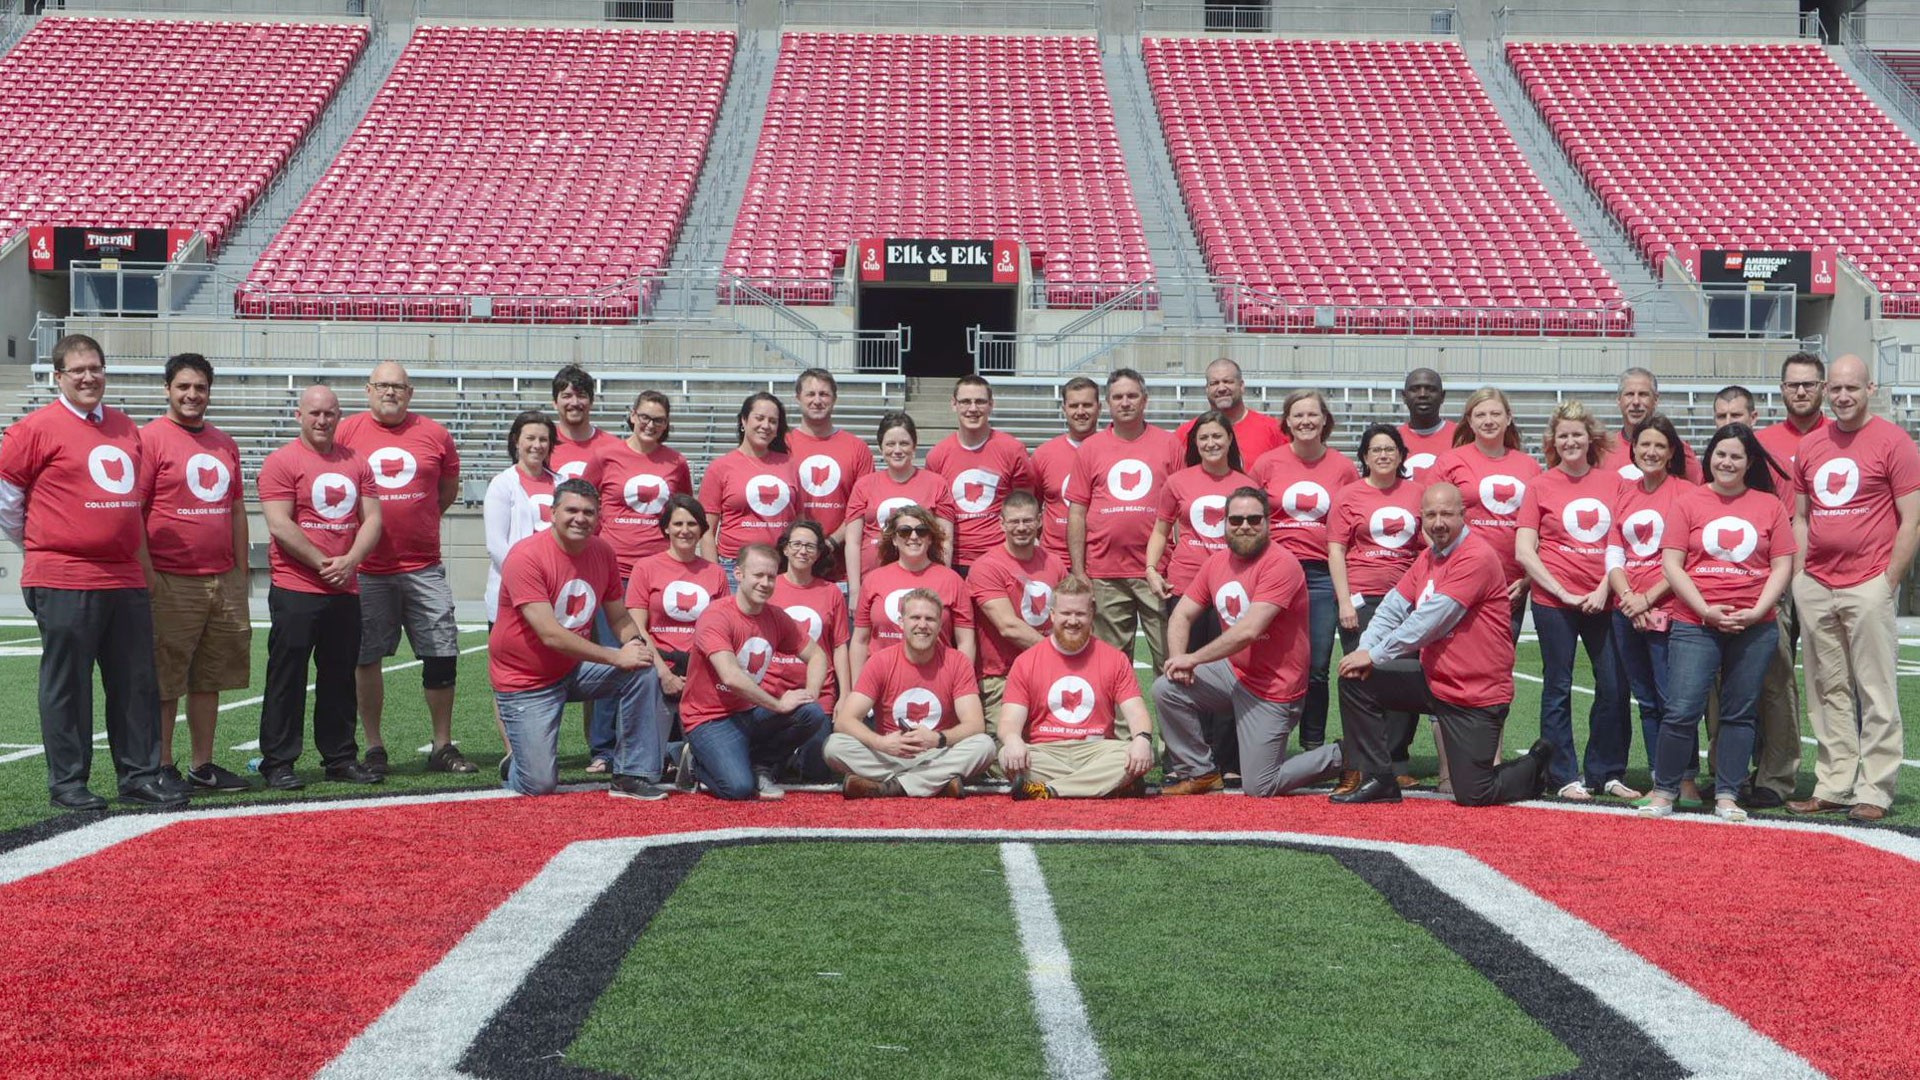 College Ready Ohio cohort of educators on Ohio Stadium field